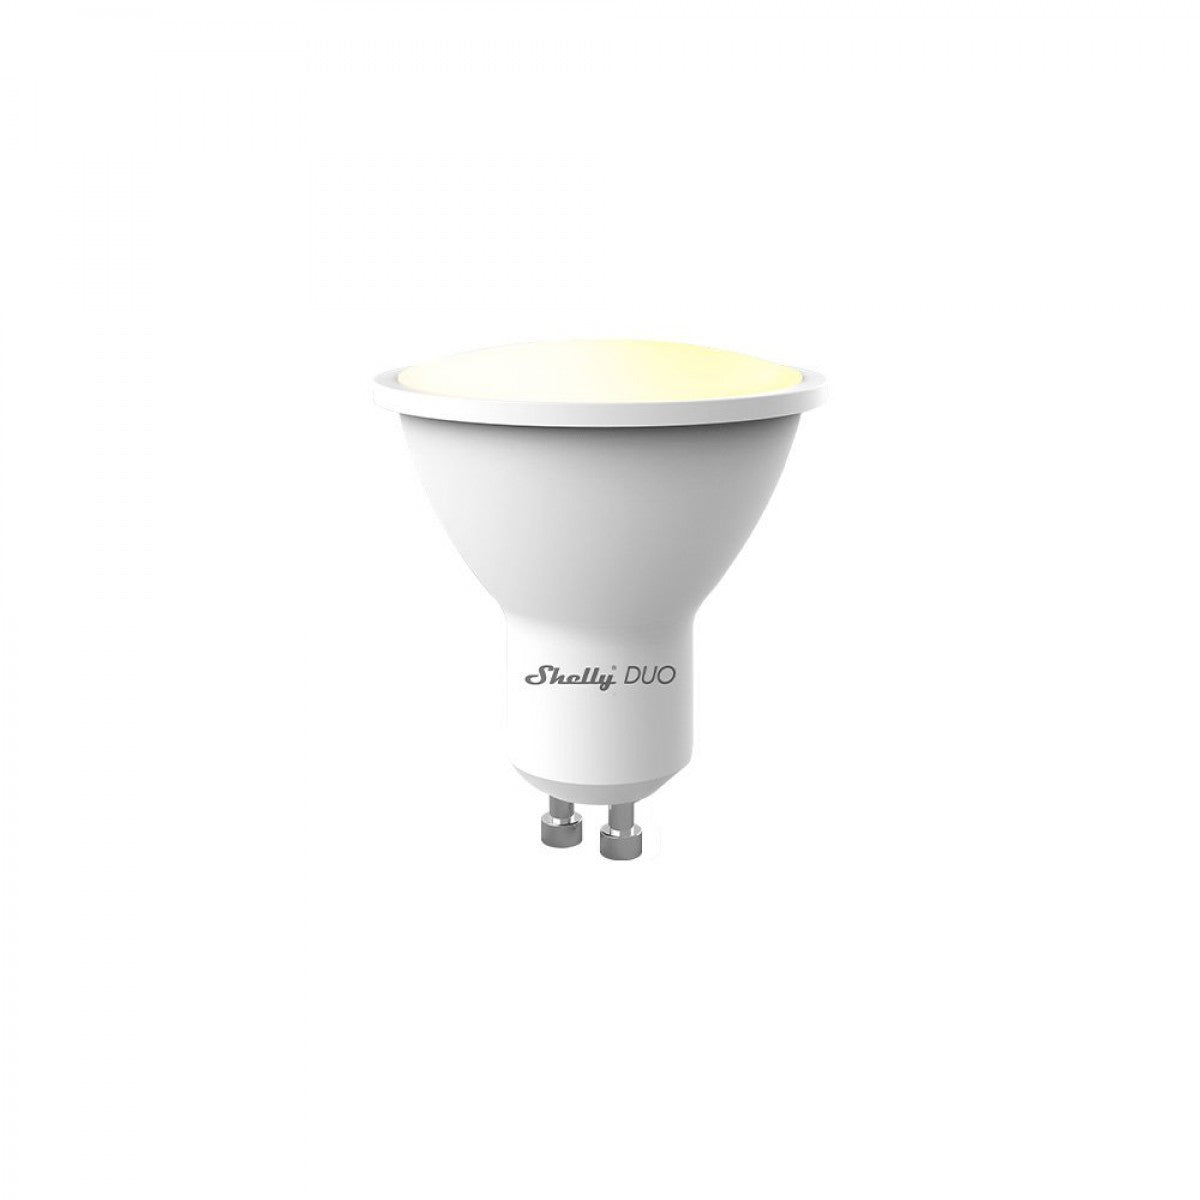 4x Shelly DUO RGBW LED WiFi Lampe 5 Watt GU10 Sockel Colour + White Tasmota 13